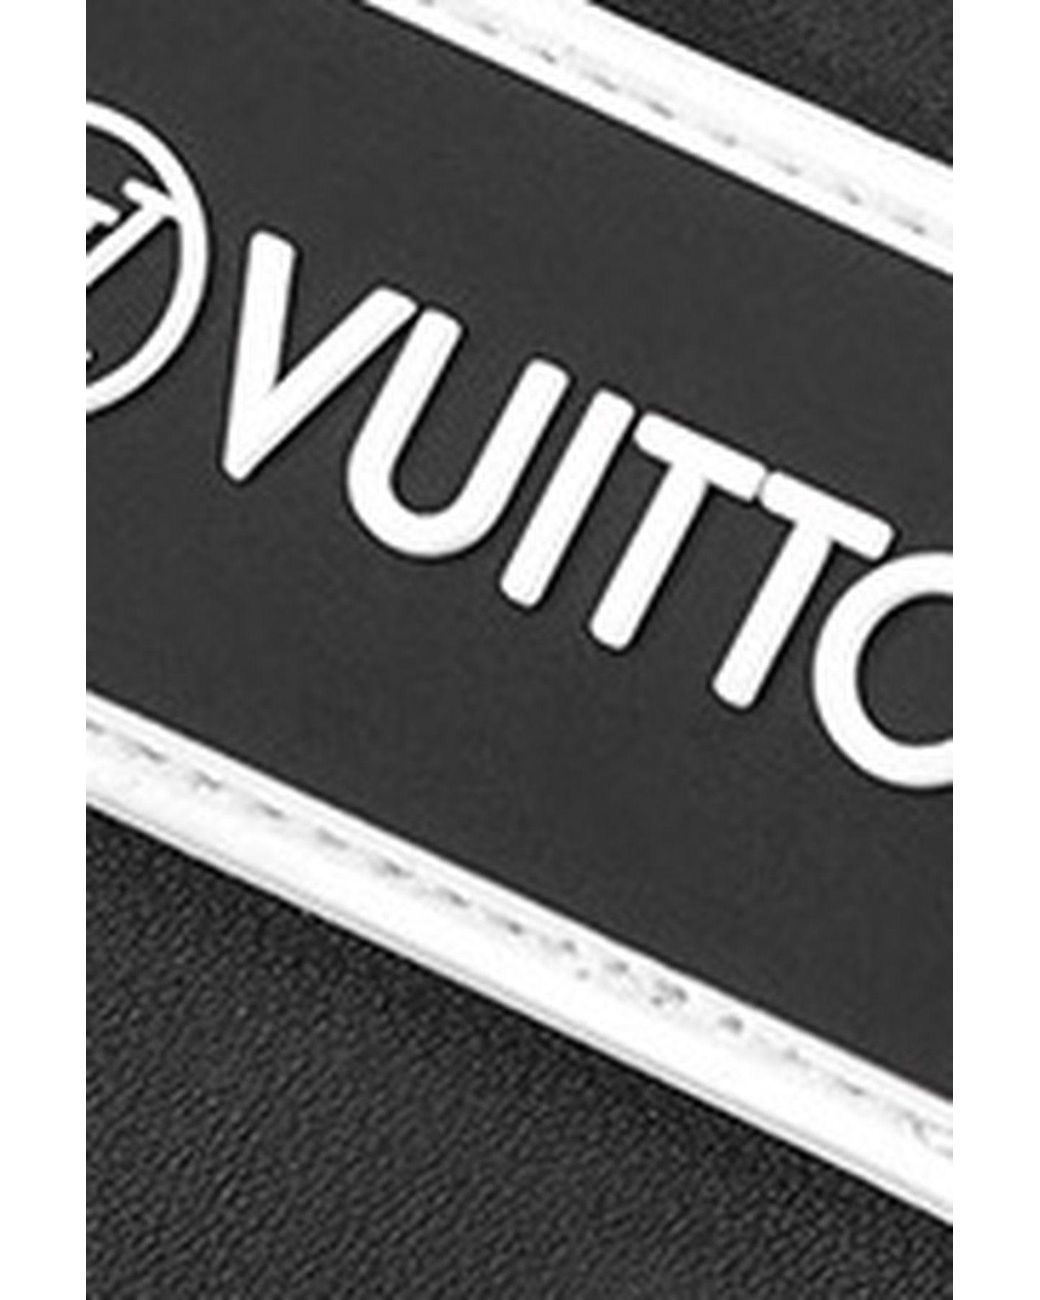 Louis Vuitton LV Sunset Comfort Flat Sandal BLACK. Size 38.0